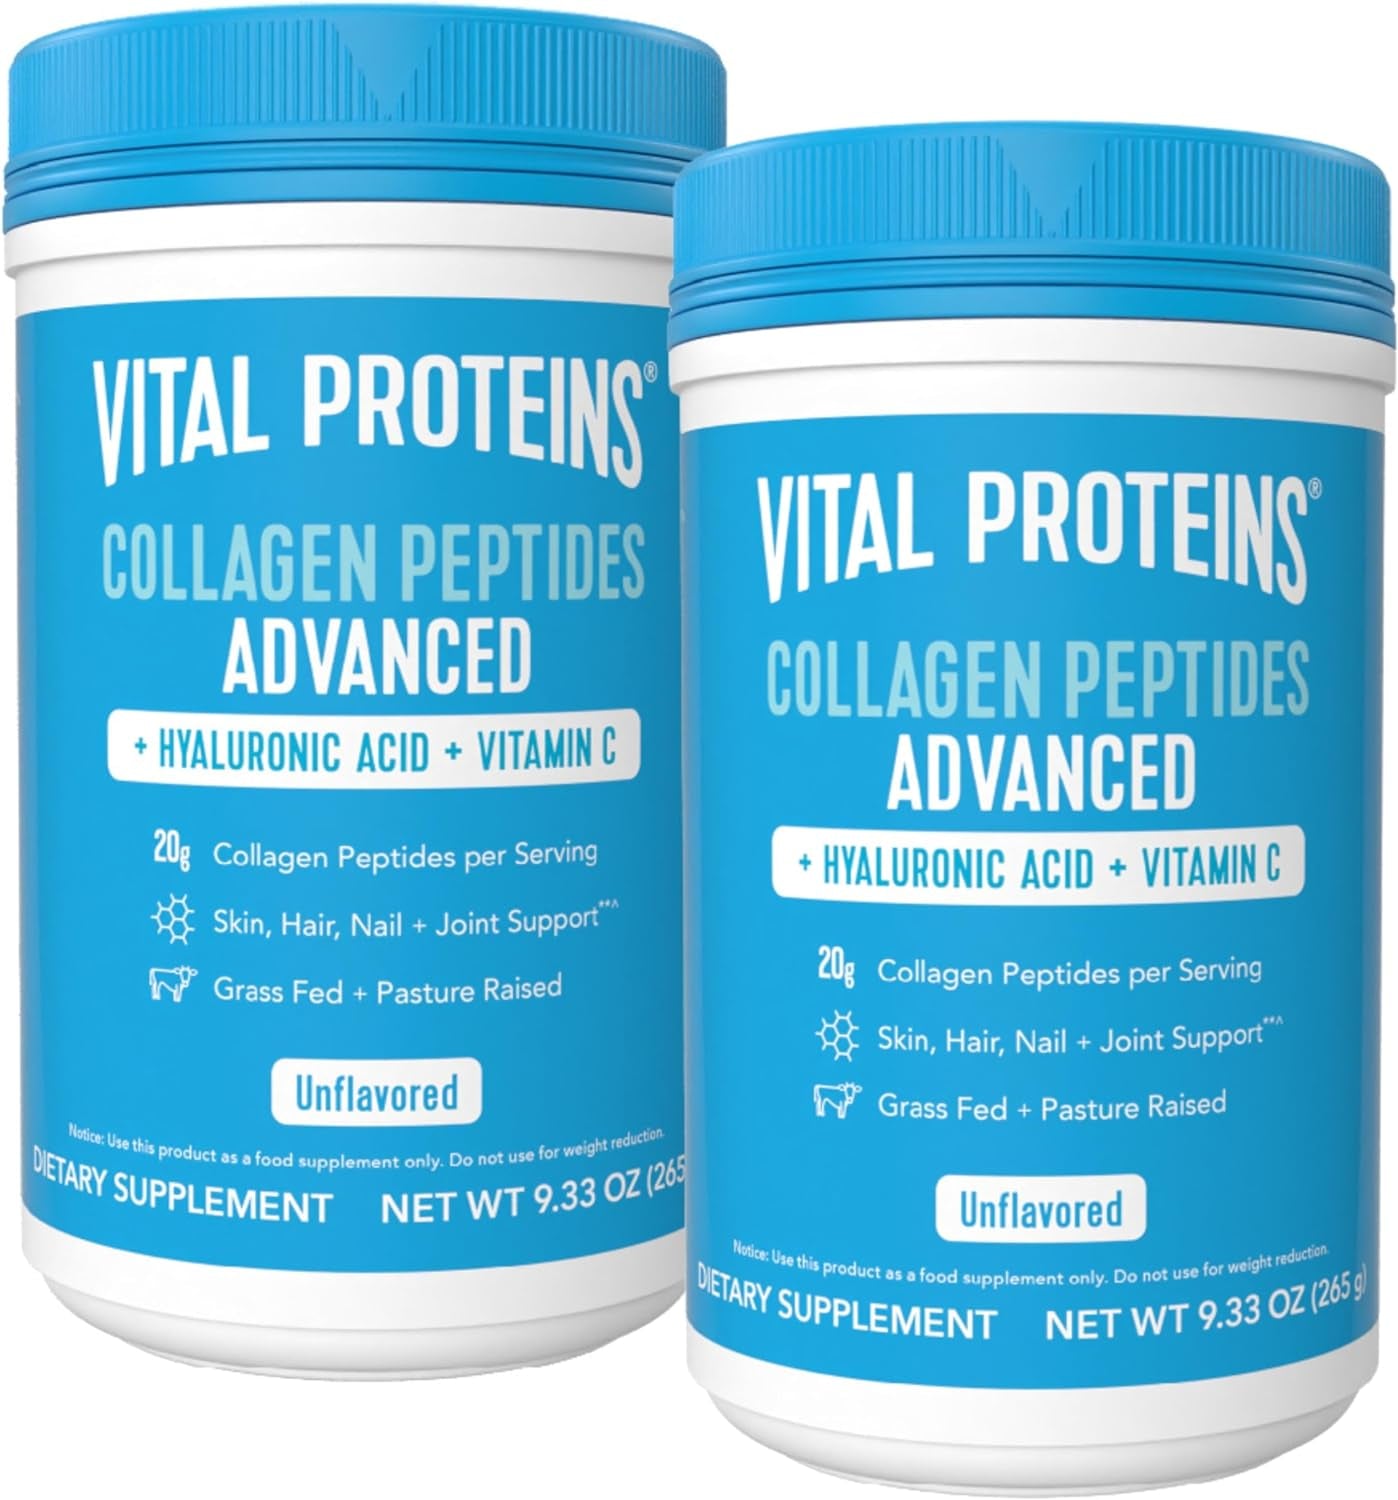 "Vital Proteins Collagen Peptides Powder - Hyaluronic Acid, Vitamin C - 20 Oz"